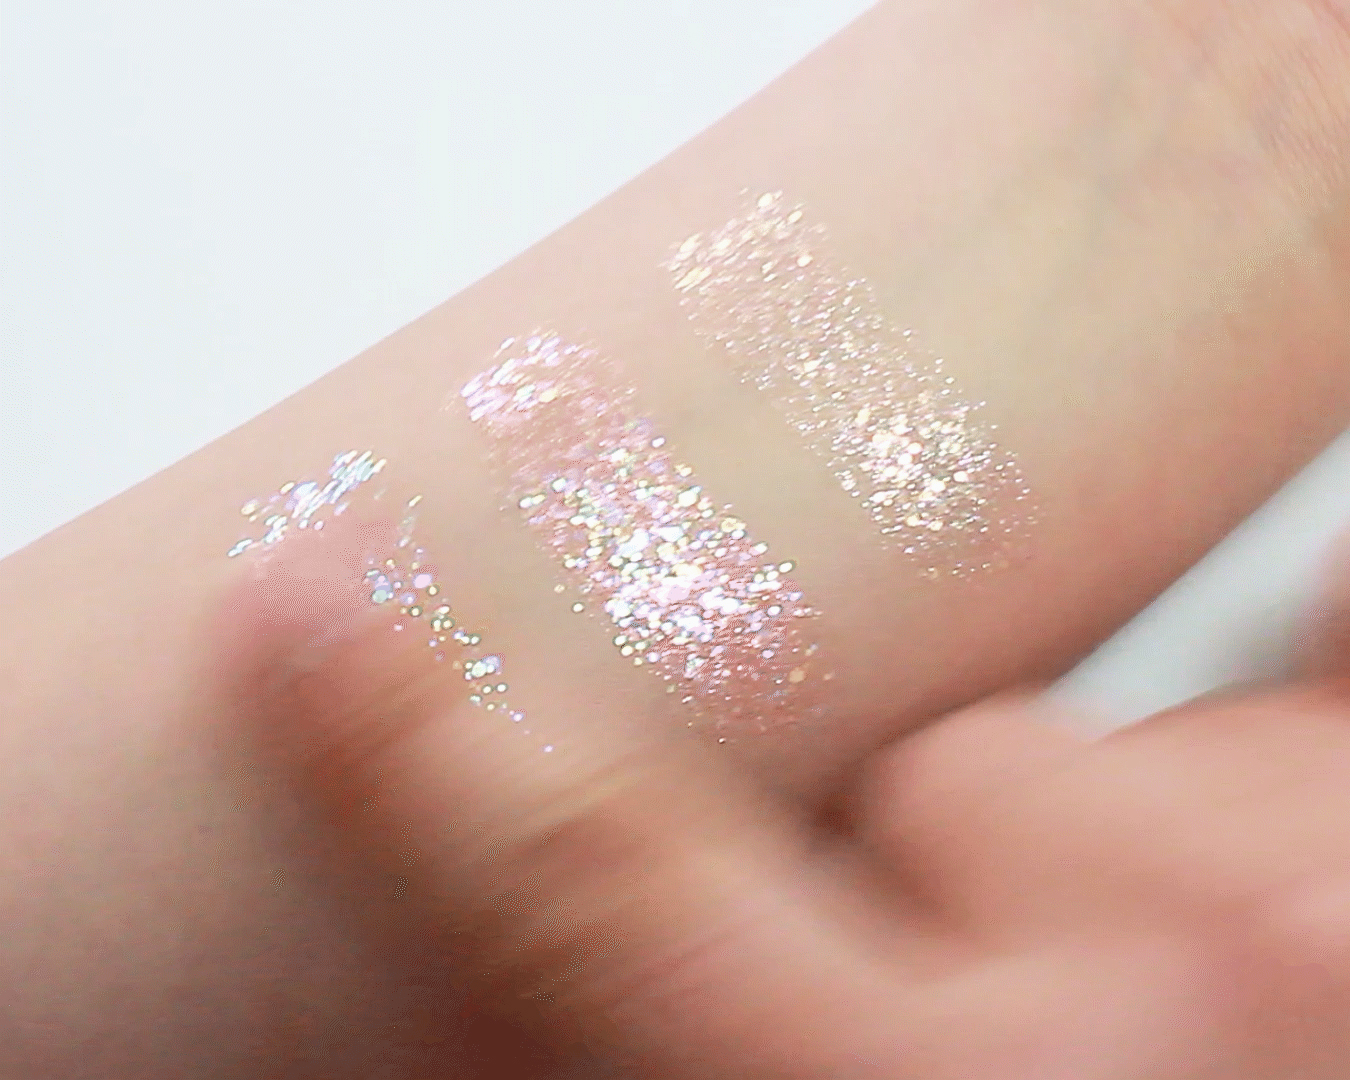 Unleashia Get Loose Glitter Gel 4g – Shop Klean Skin